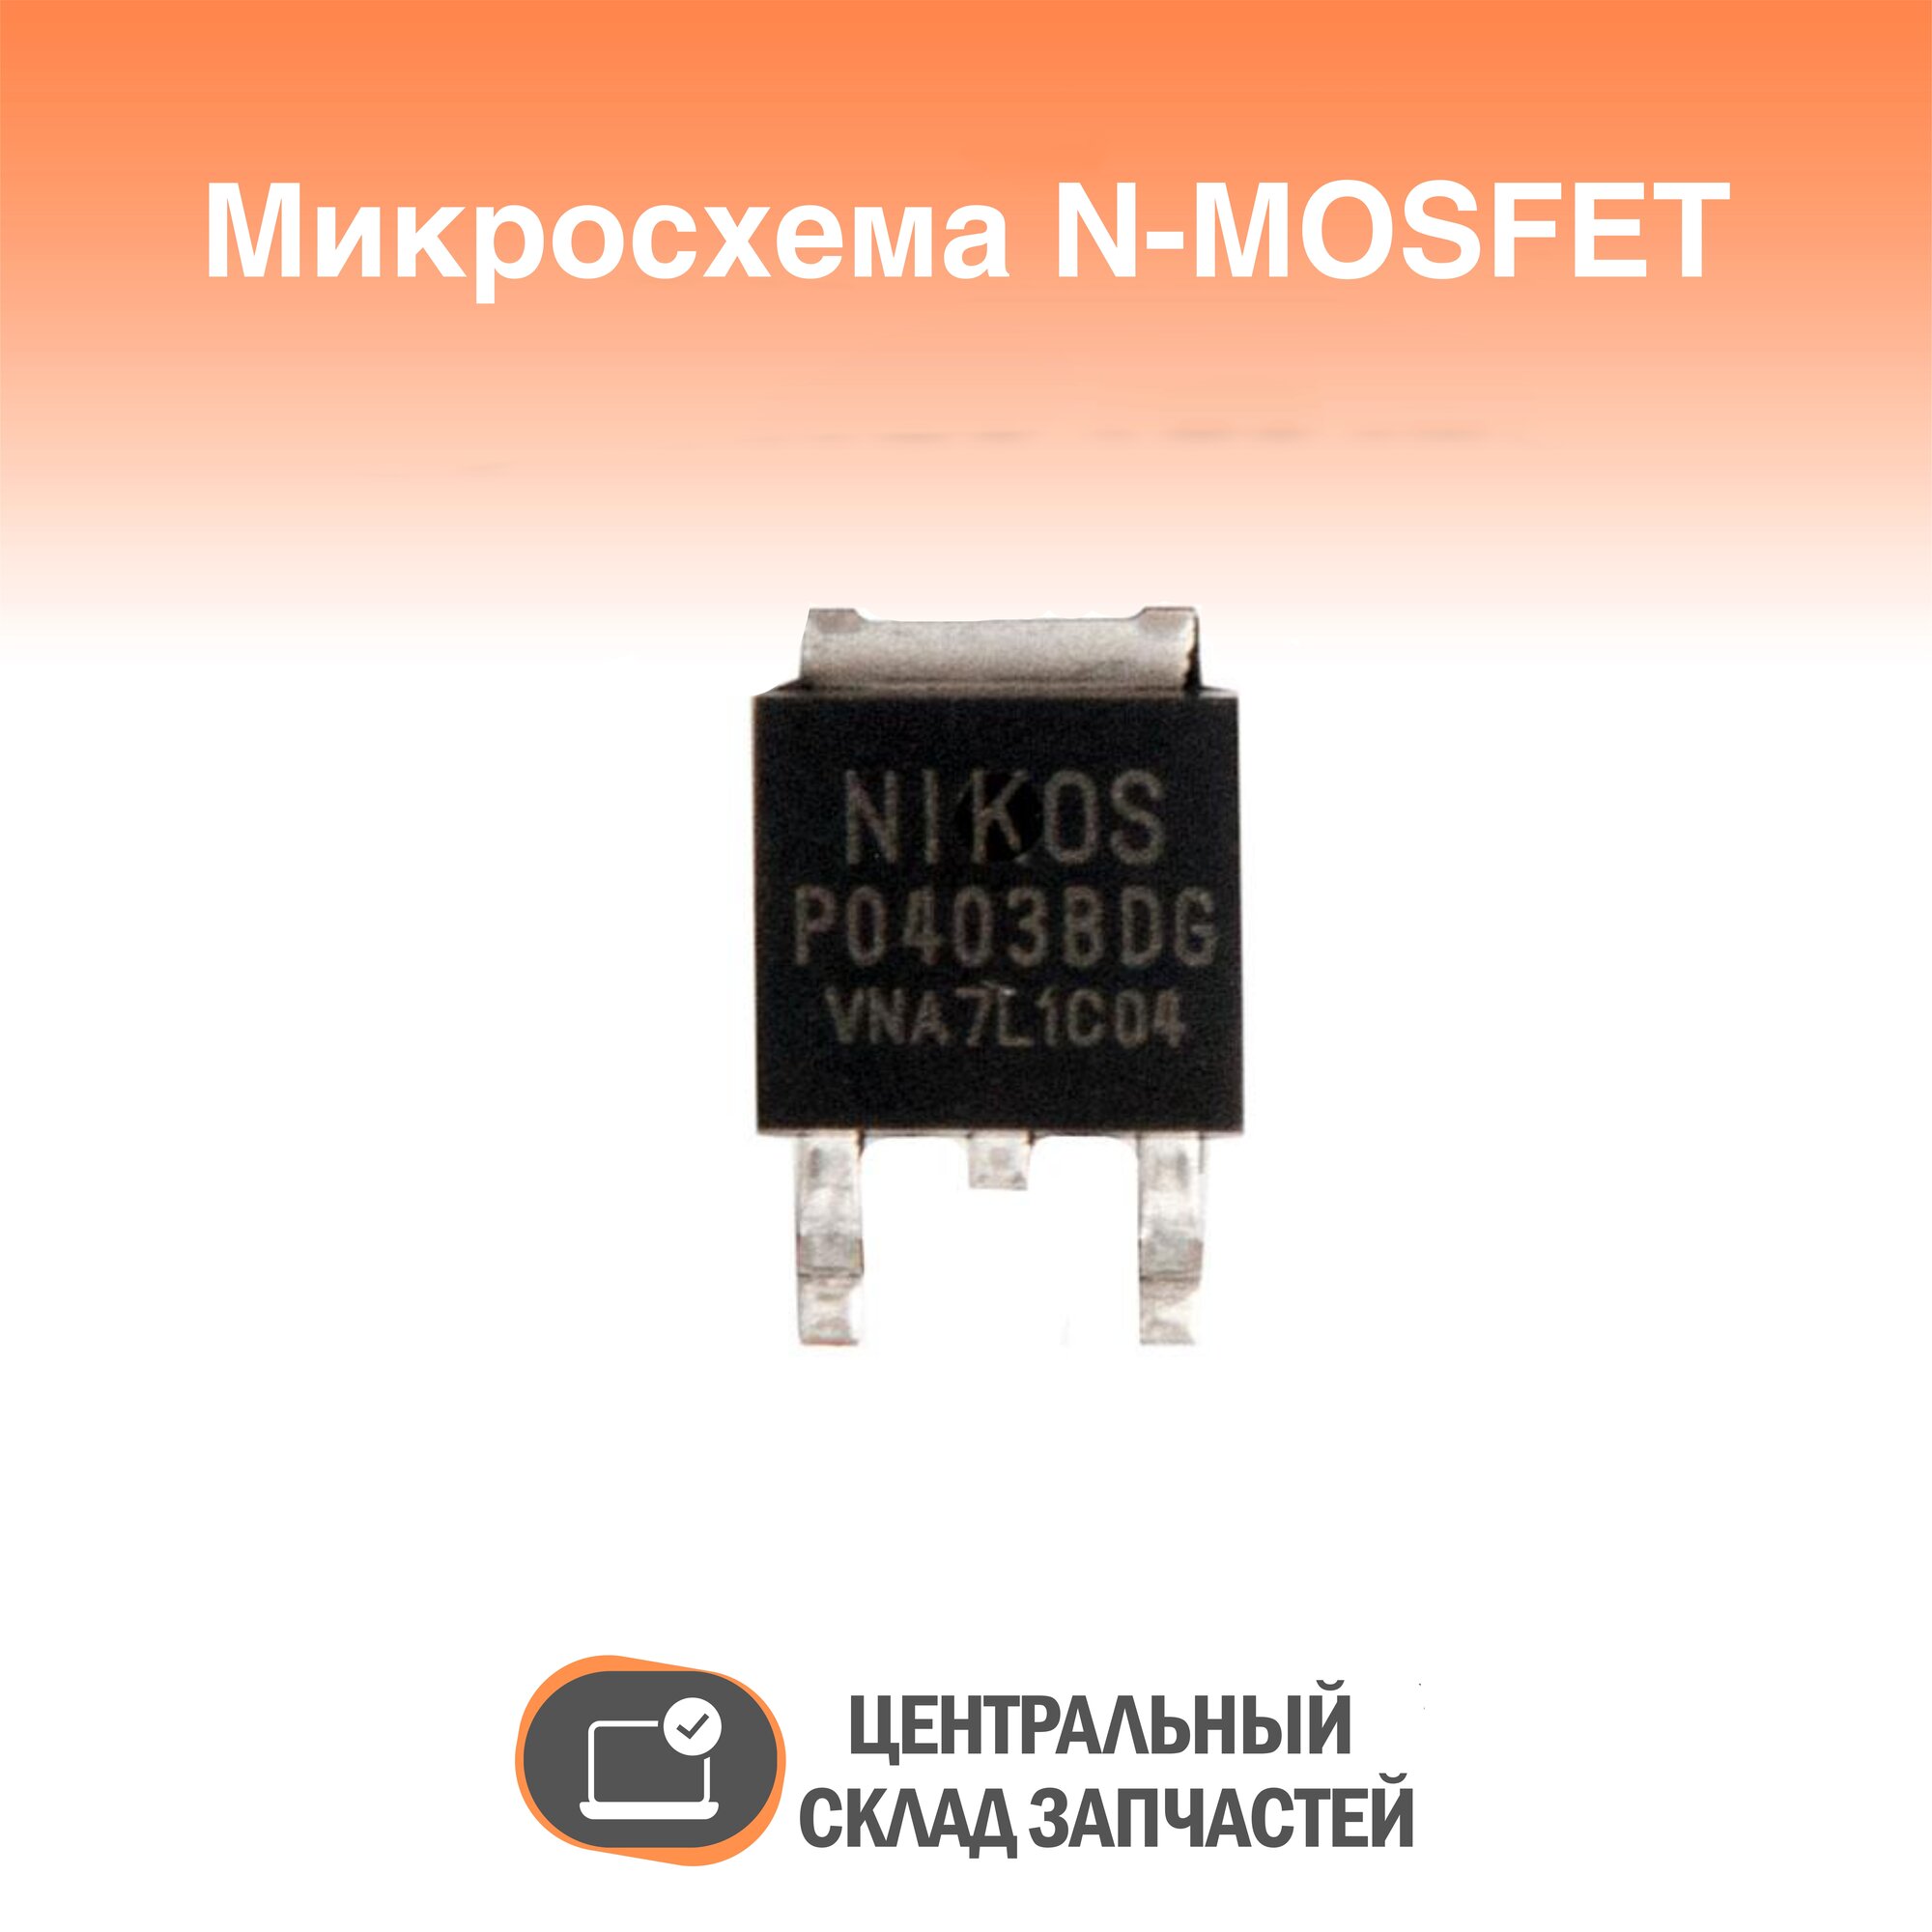 Microchip / Микросхема N-MOSFET P0403BDG T0-252